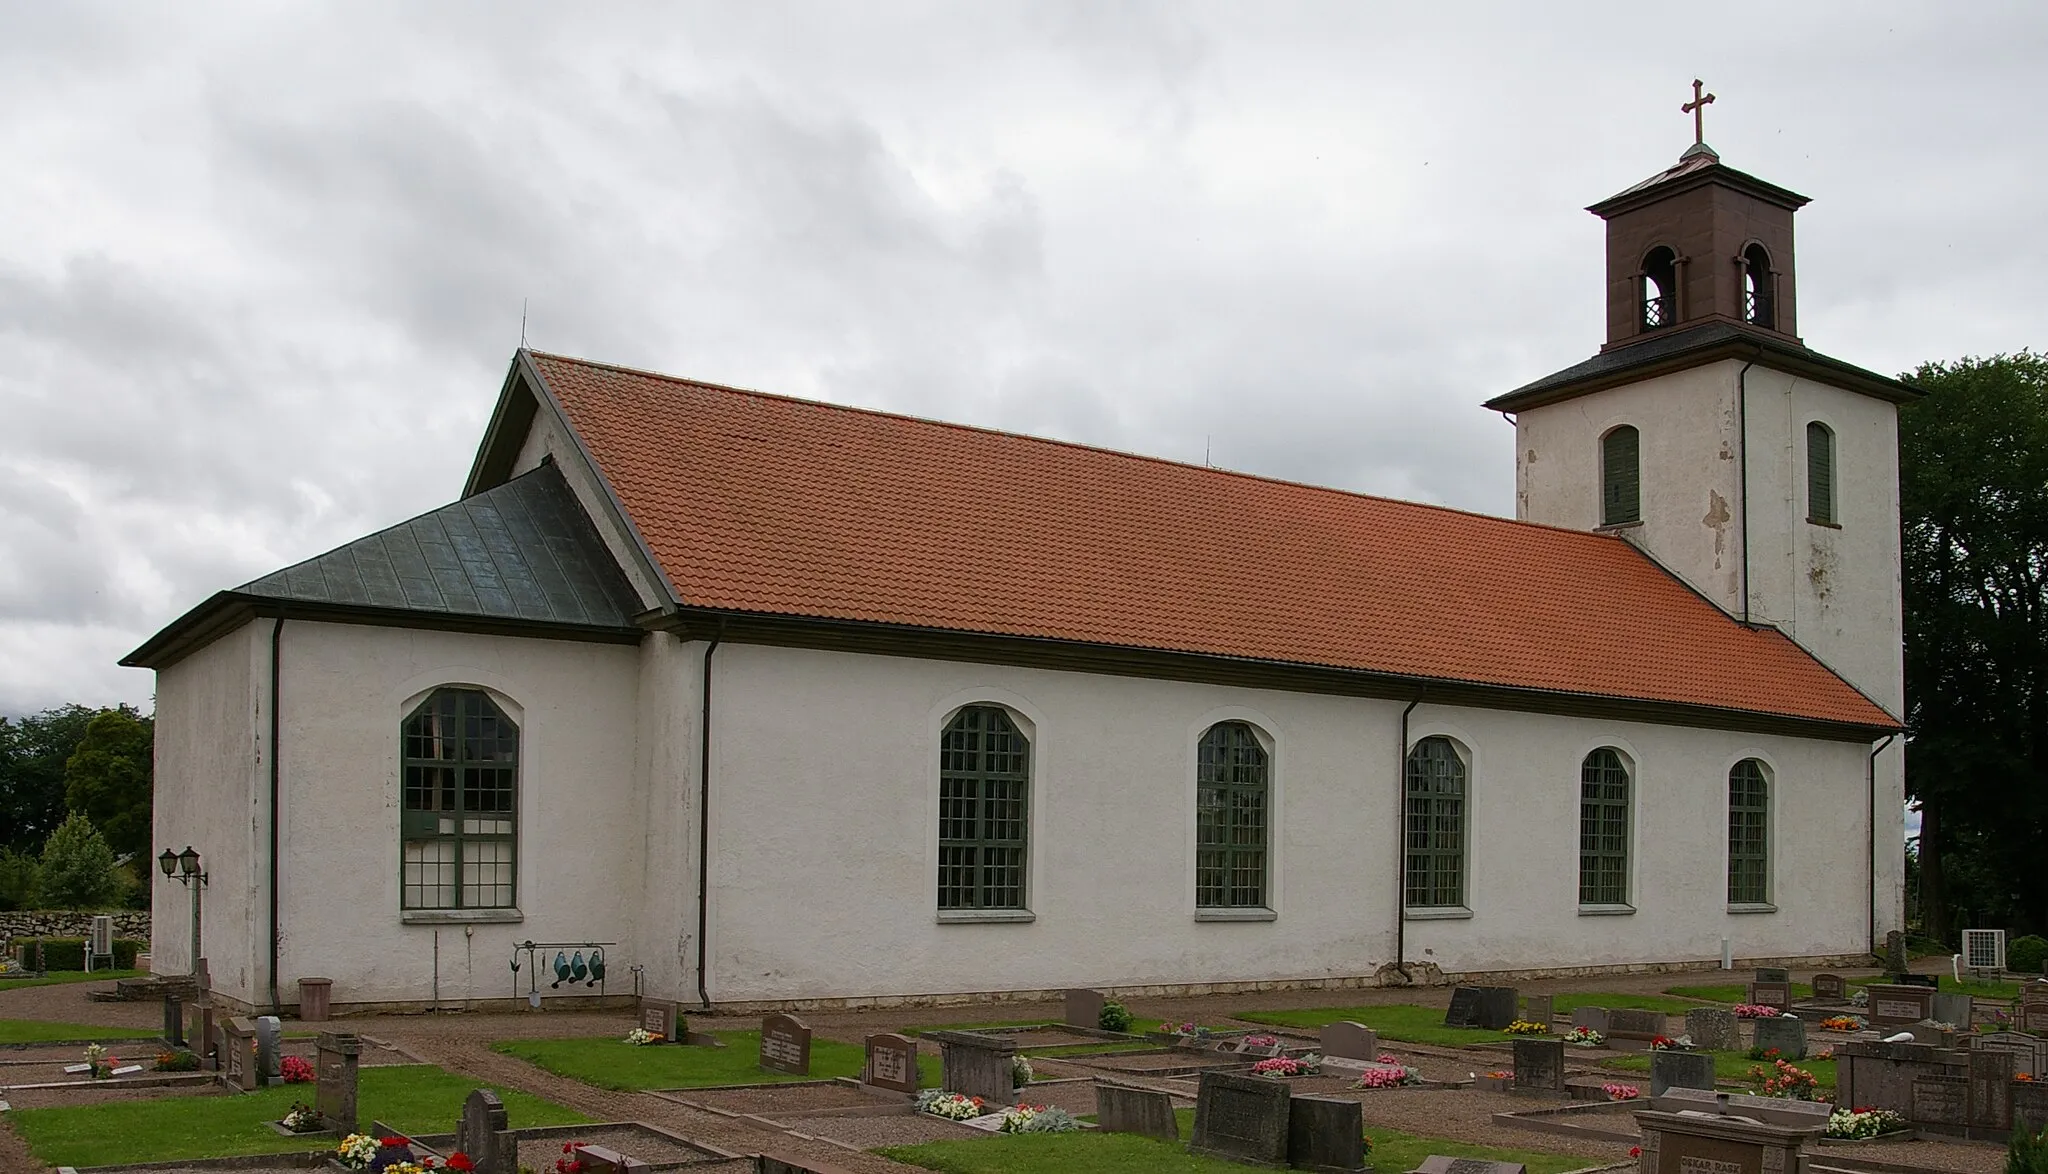 Photo showing: Broddetorps kyrka (Swedish:Church of Broddetorp) in Västergötland, Sweden.